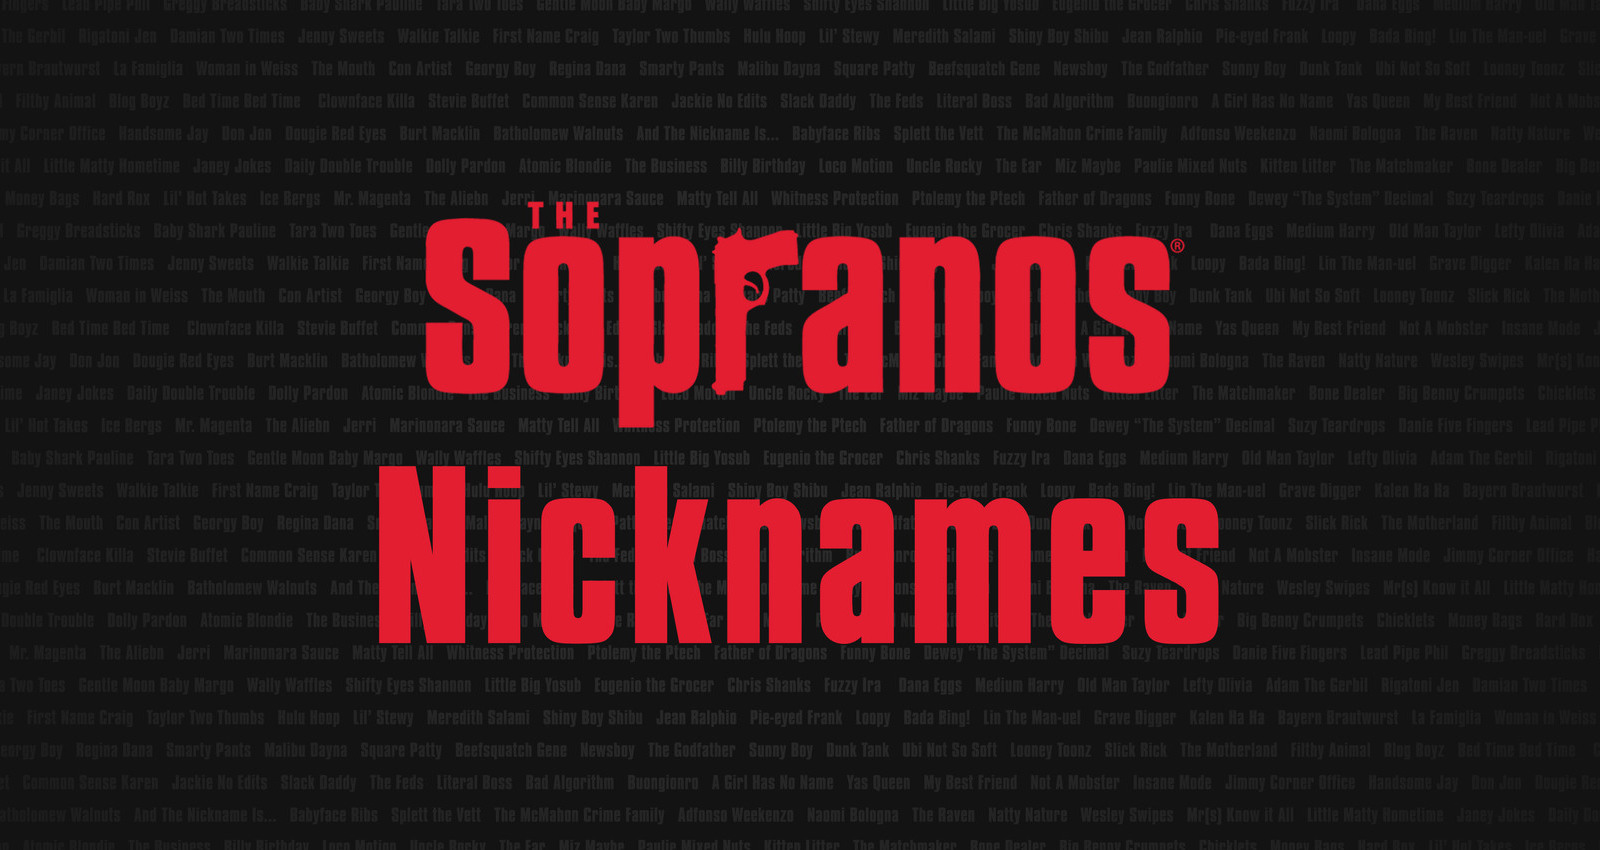 The Sopranos Nicknames